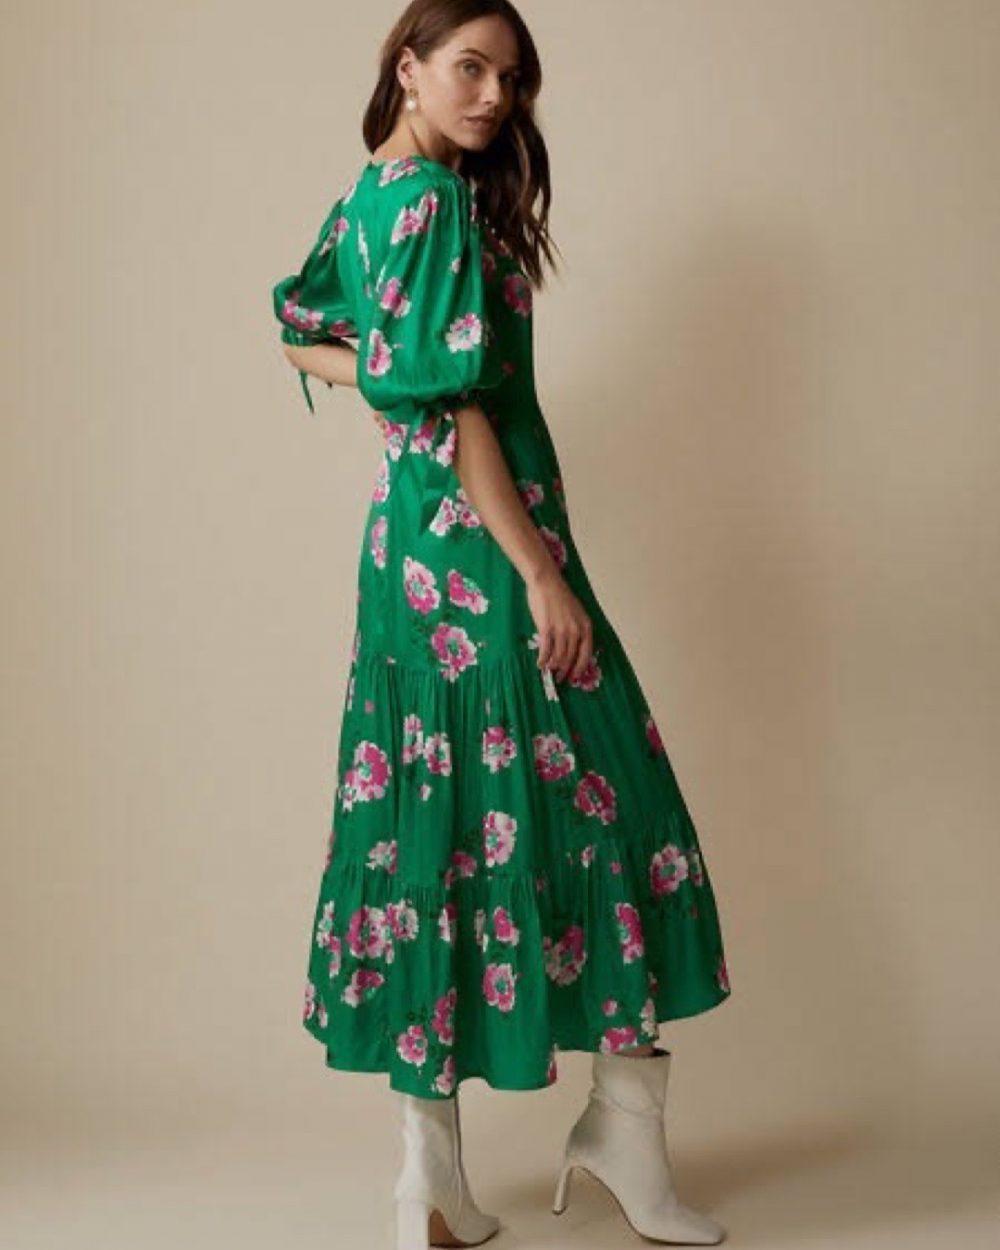 heather-green-floral-dress-onrotate